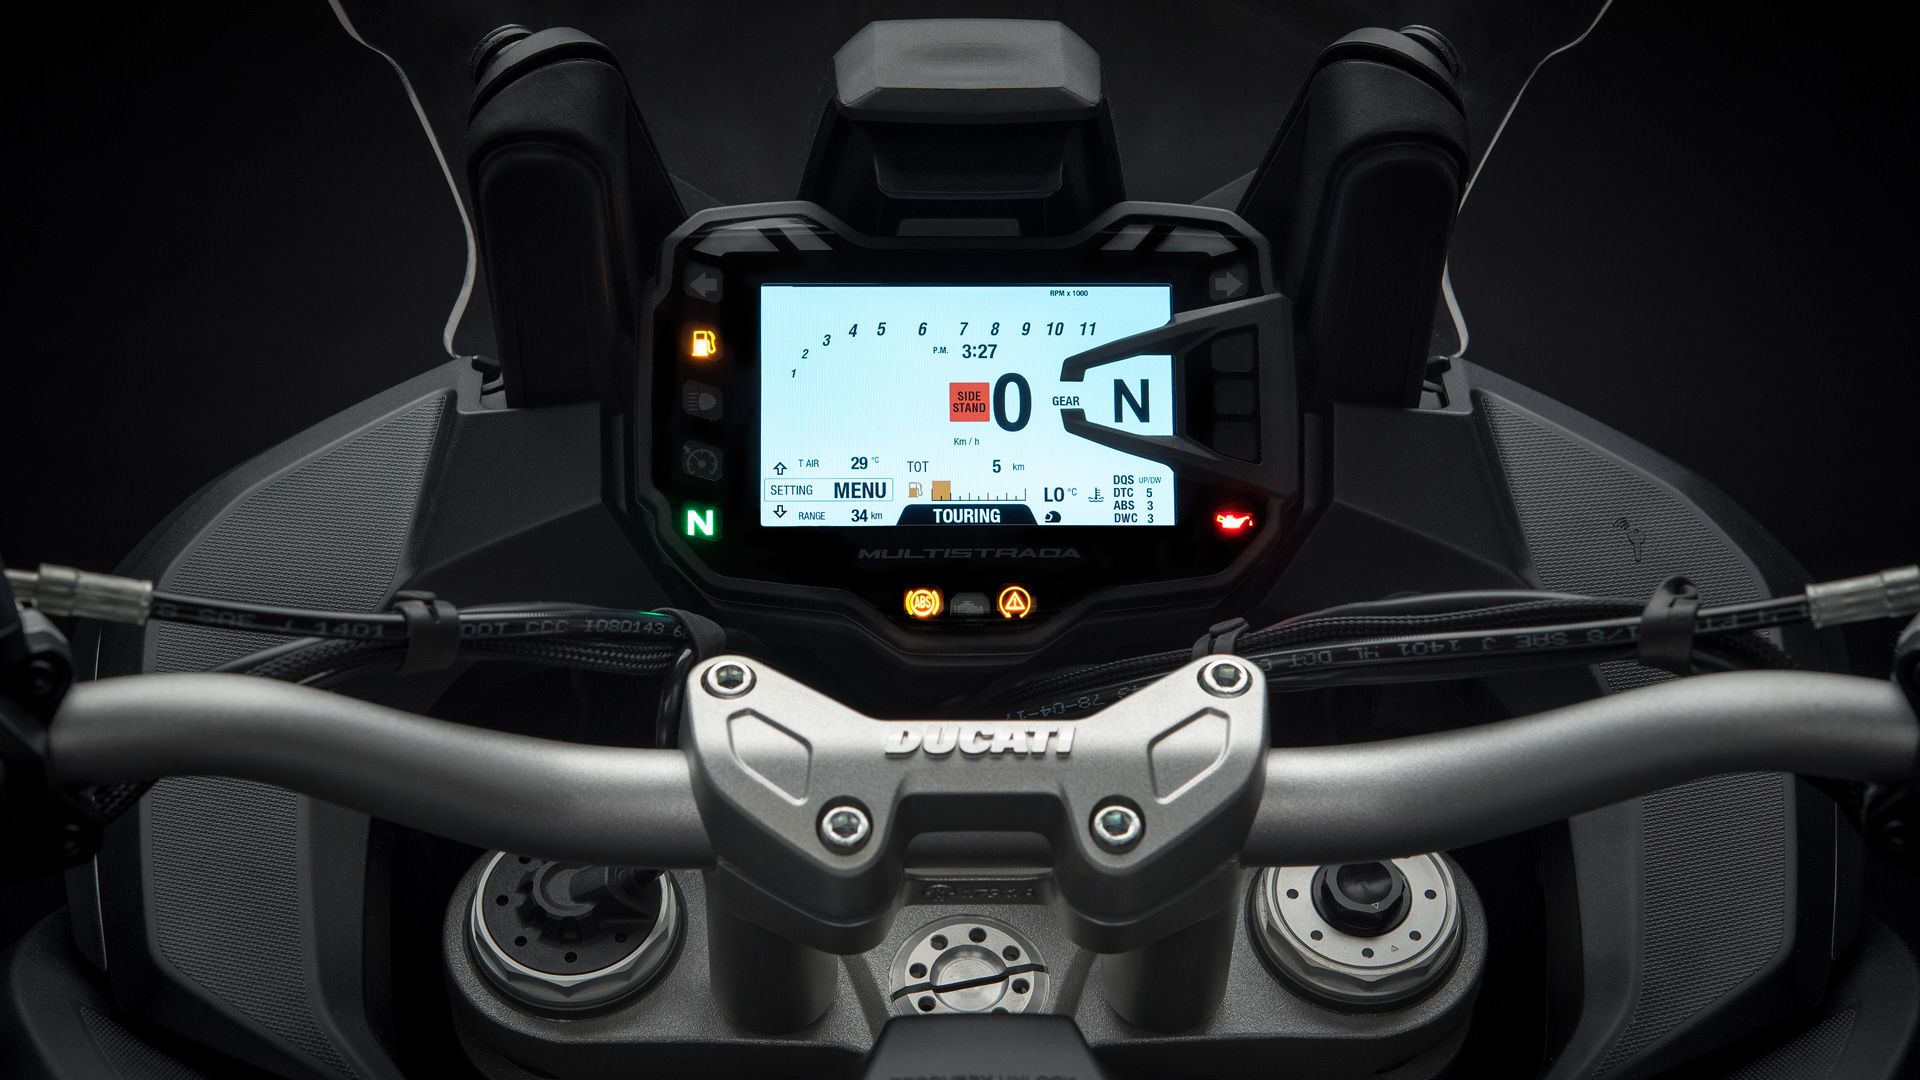 2018 - 2019 Ducati Multistrada 1260